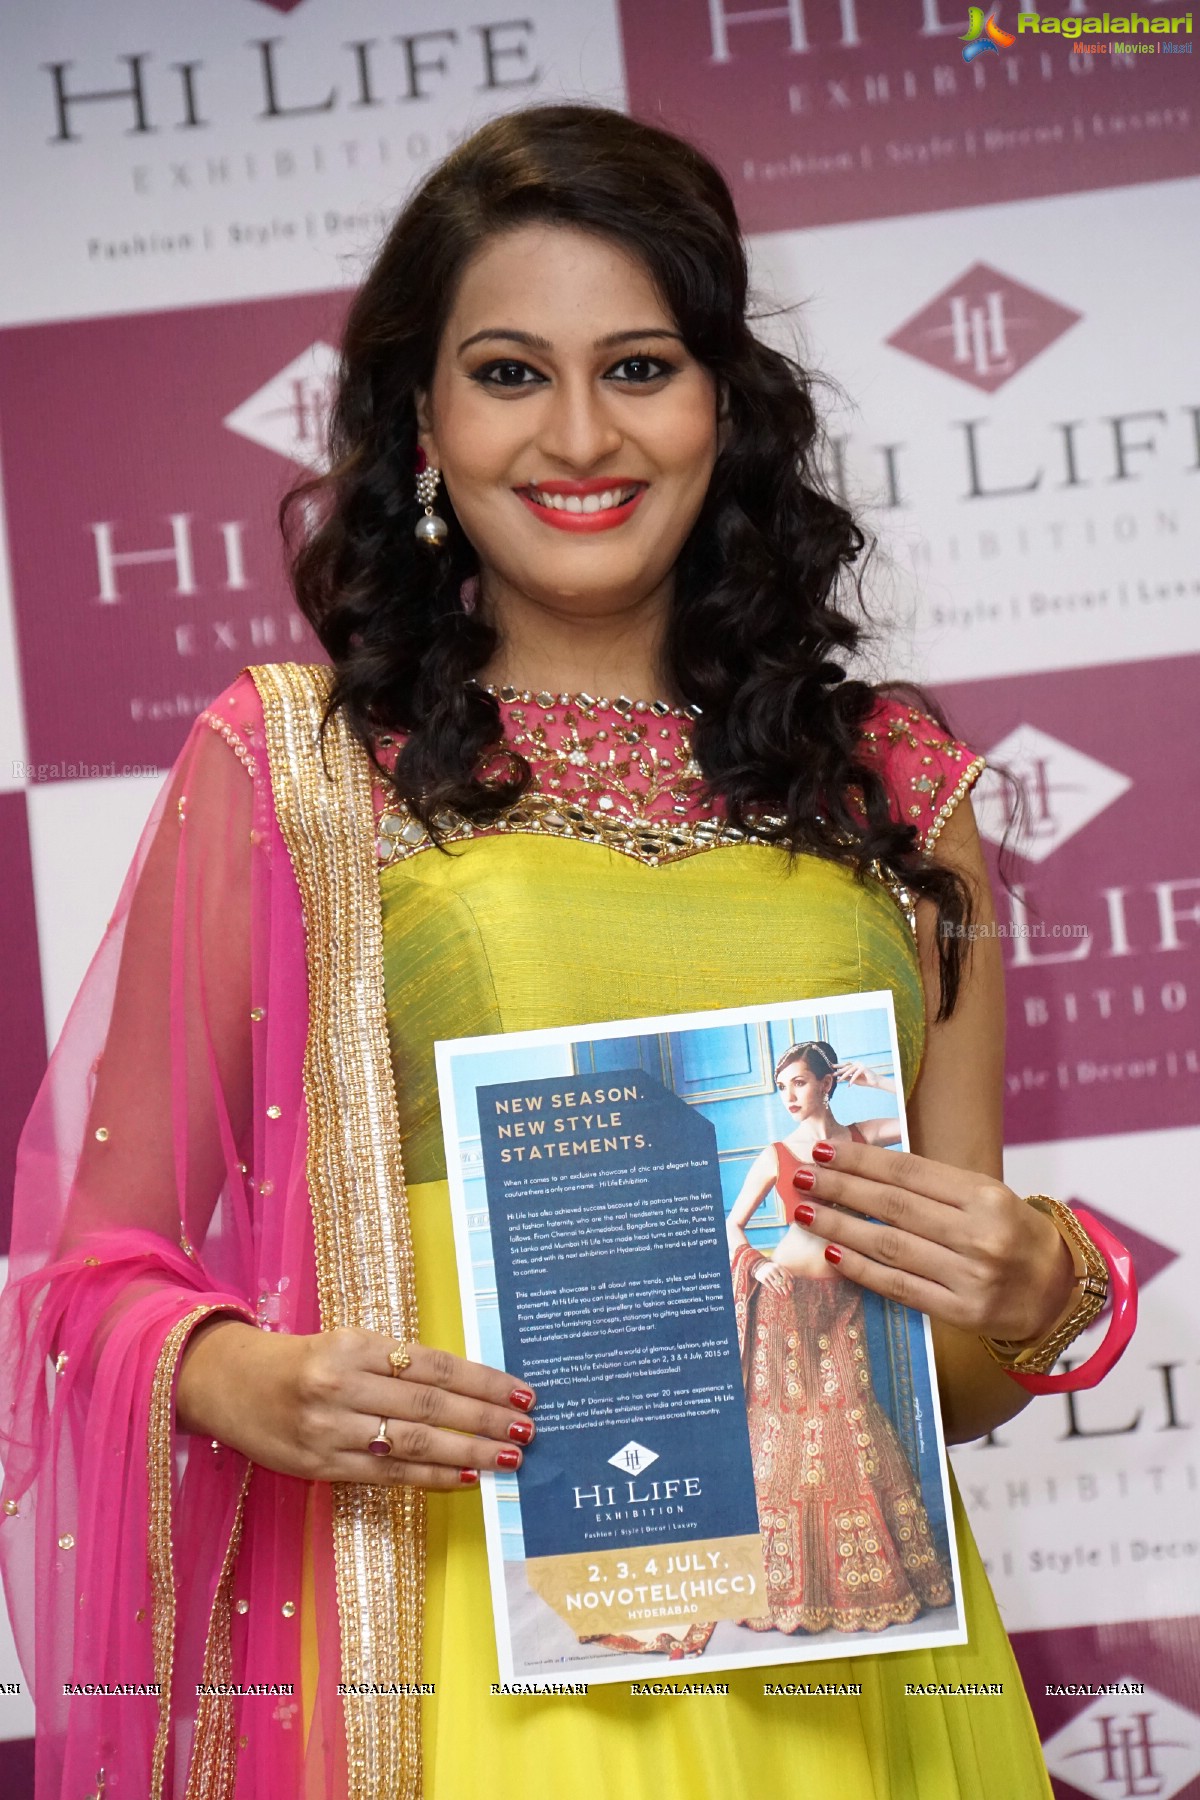 Hi Life Exhibition Brochure Launch